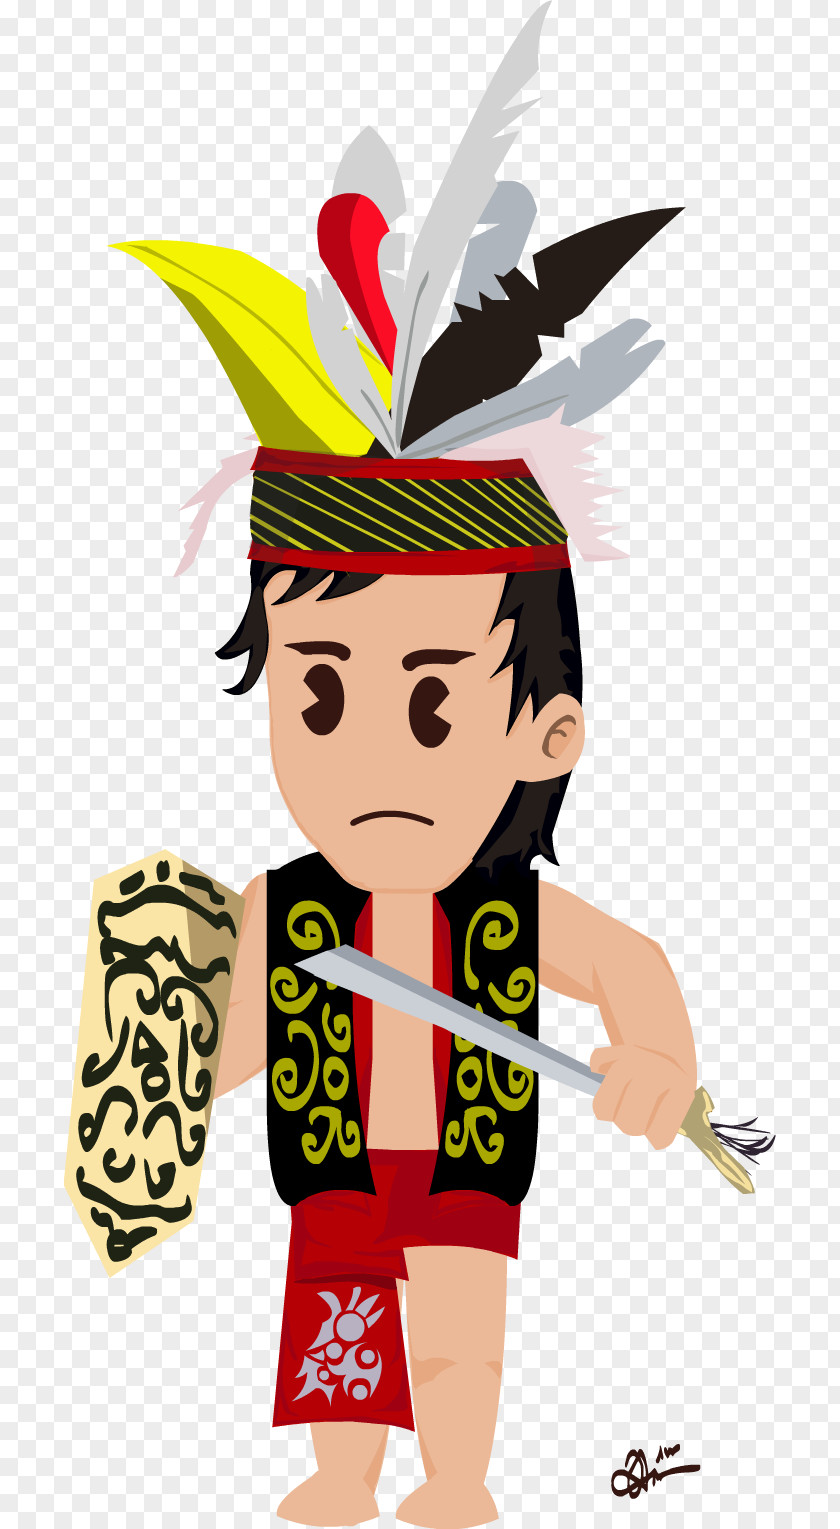 Warrior Borneo Cartoon Dayak People Animation PNG